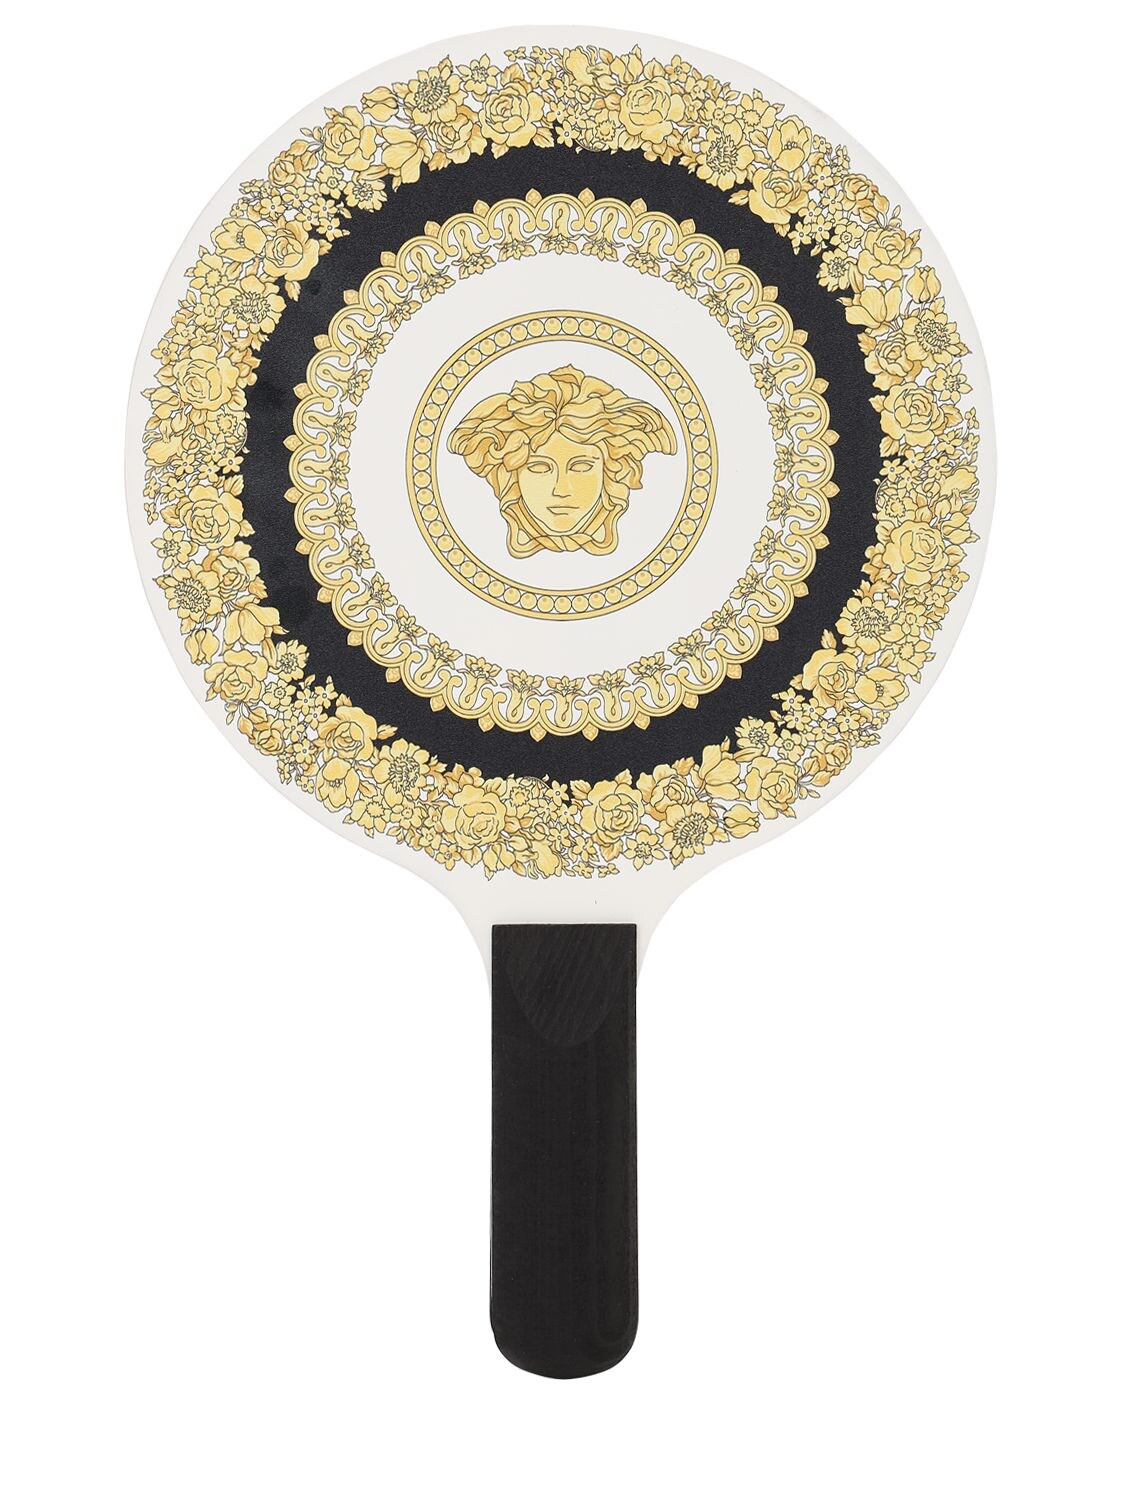 Versace Play On Matkot Racket & Ball Set In Black,gold